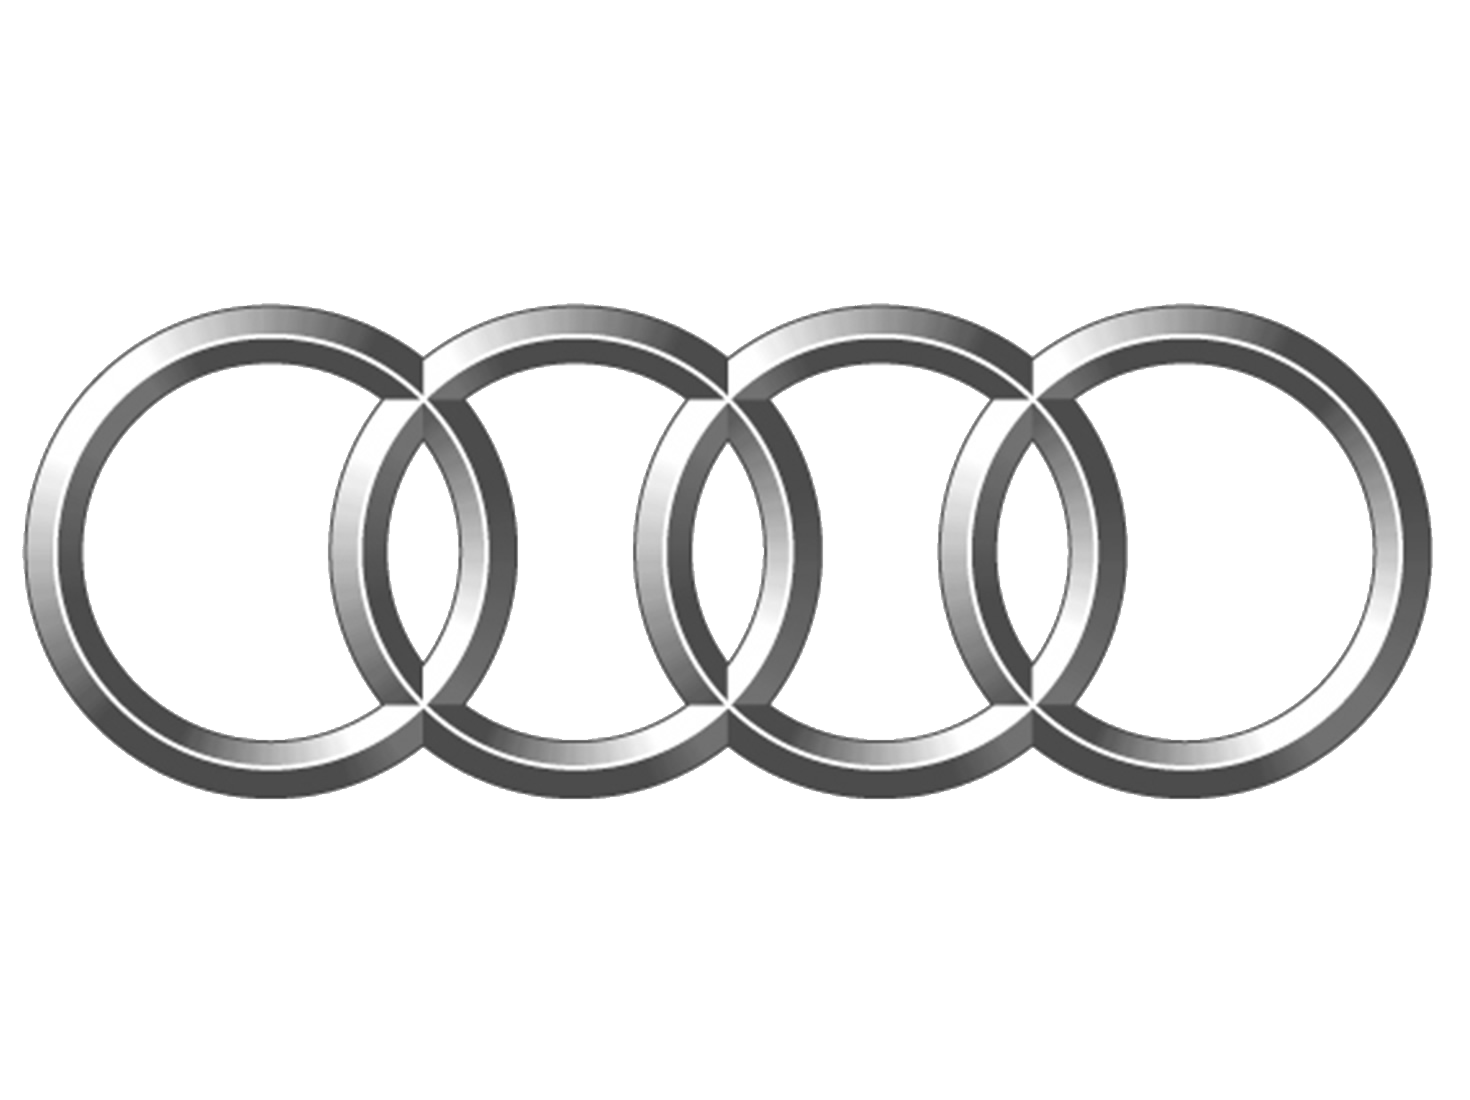 Audi car logo PNG brand image transparent image download, size: 1470x1100px